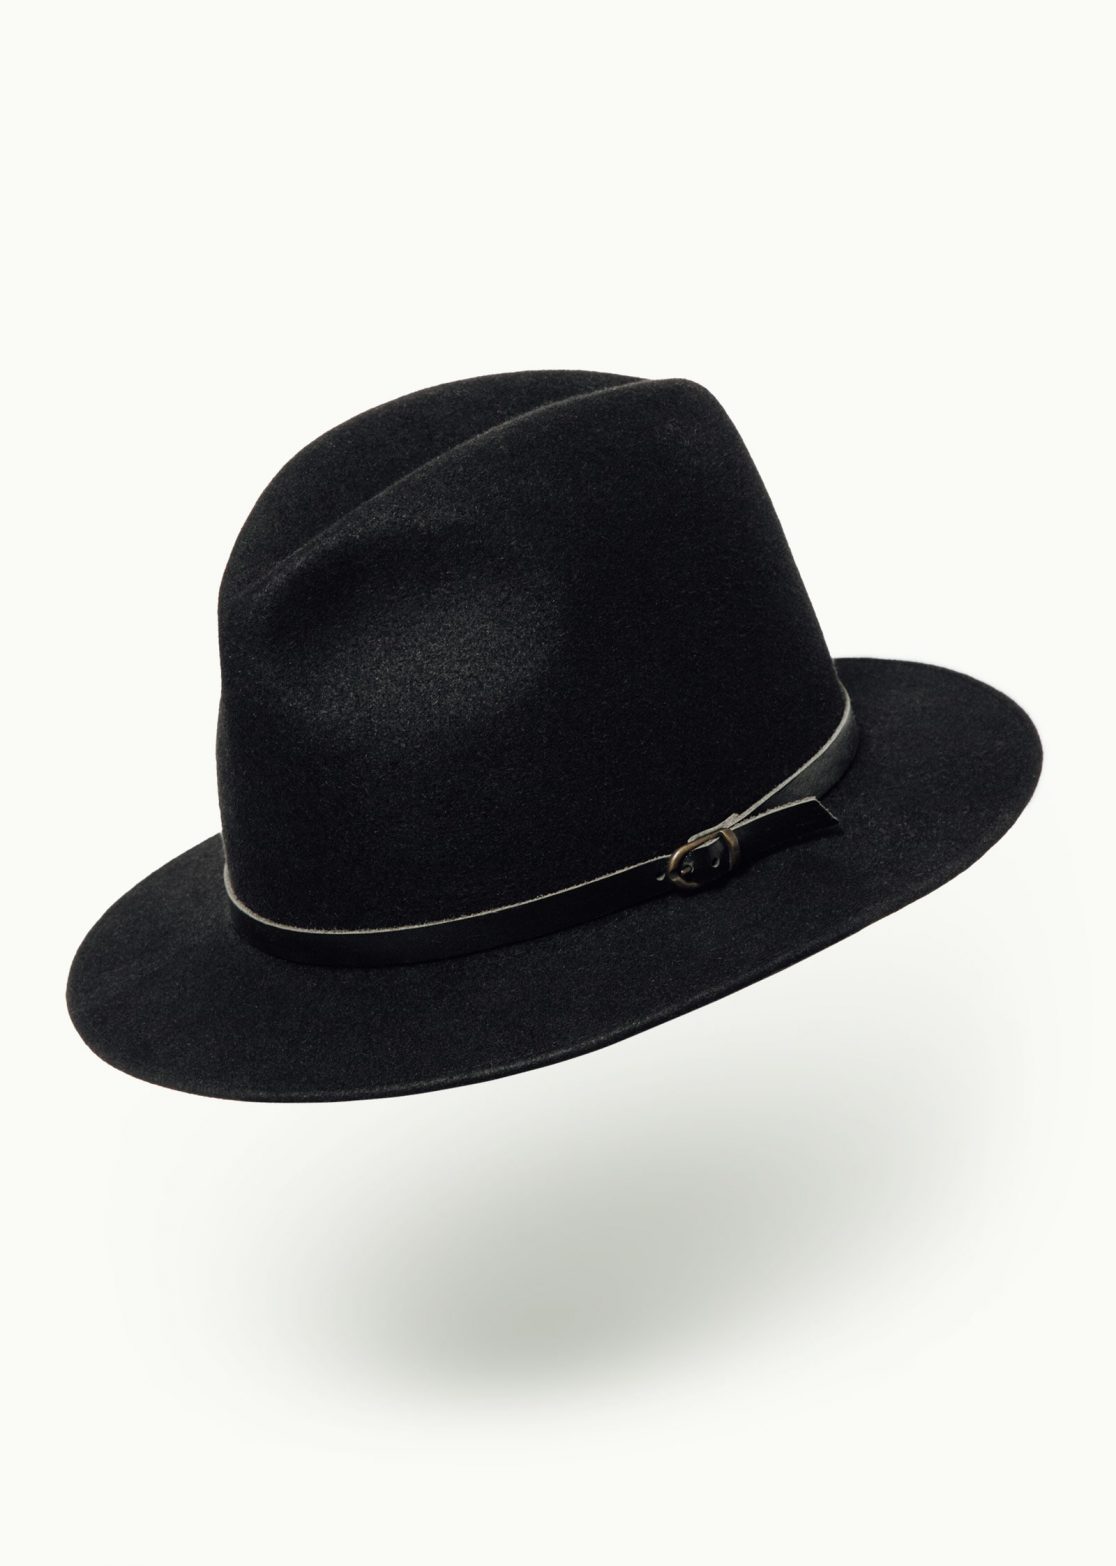 Hats - Women - Unisex - Men - Olbers High & Narrow Black Flat Image Primary